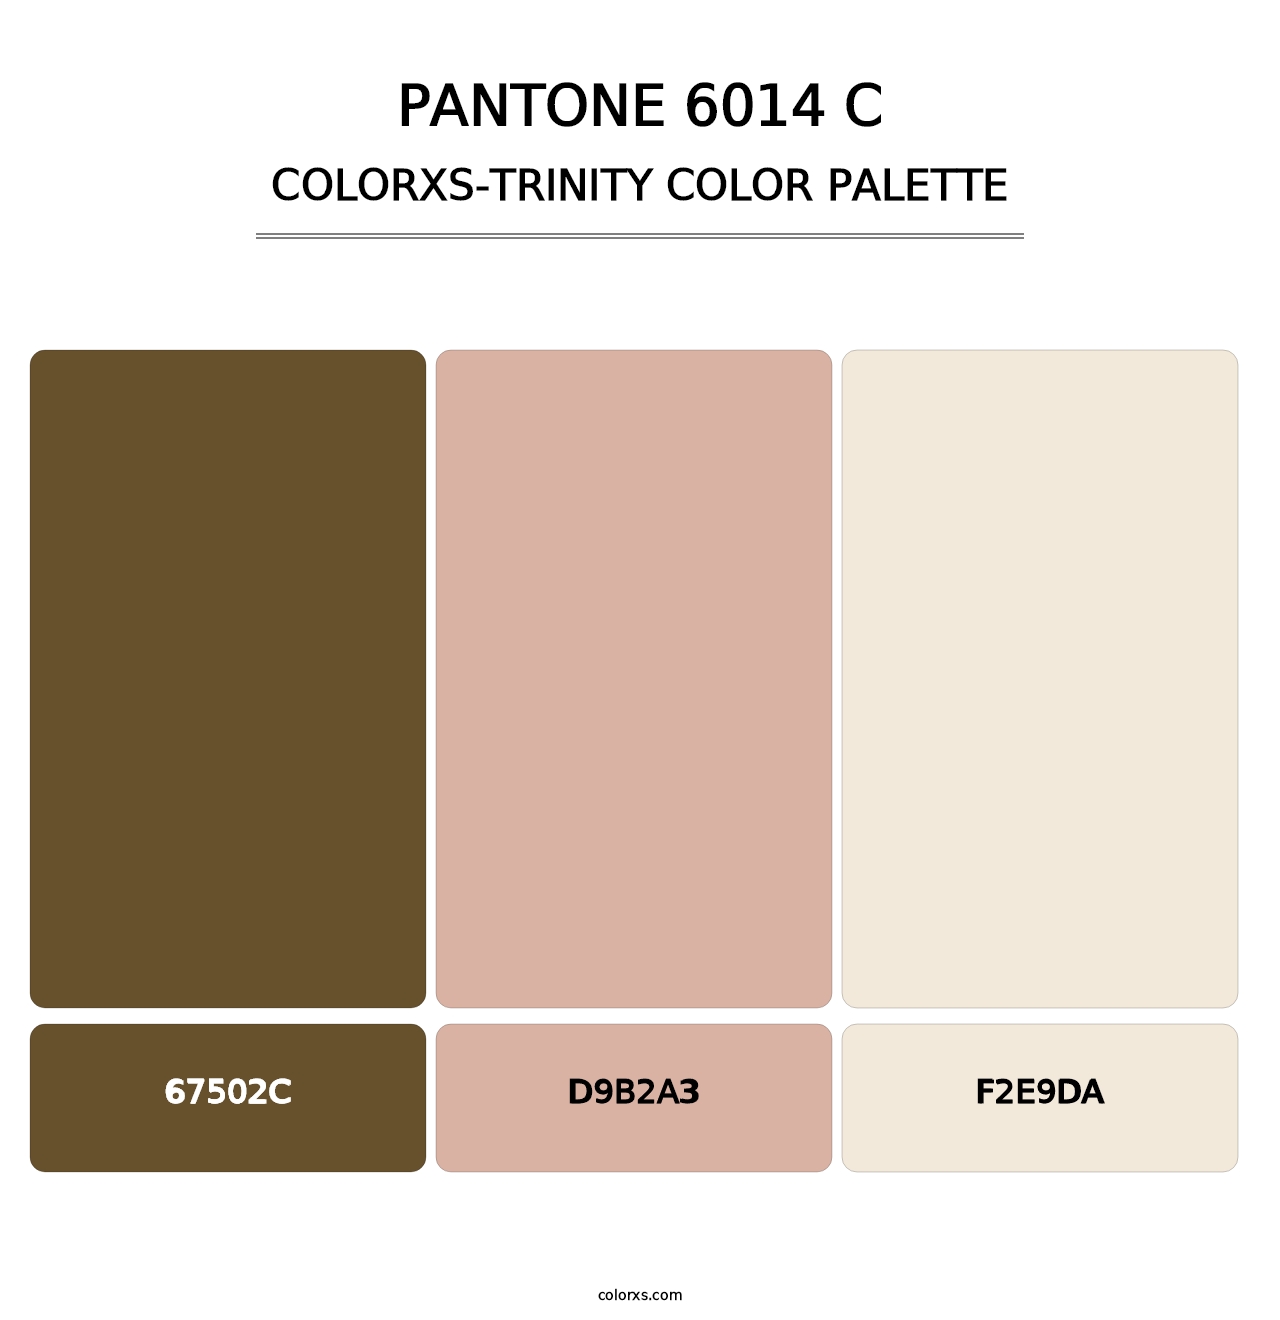 PANTONE 6014 C - Colorxs Trinity Palette